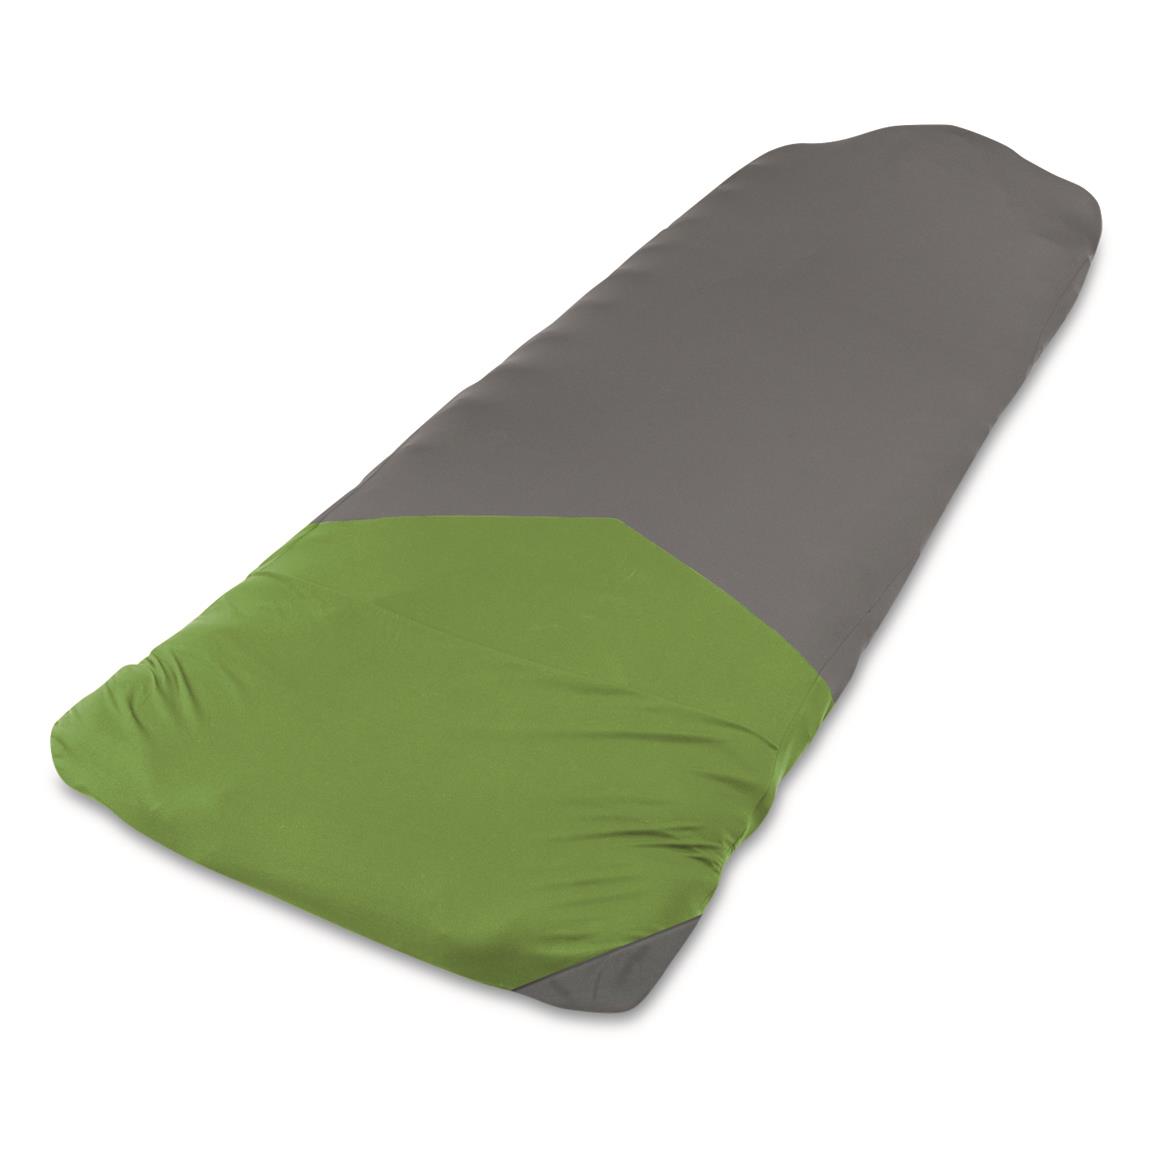 Klymit V Sheet Sleeping Pad Cover, Green/Gray